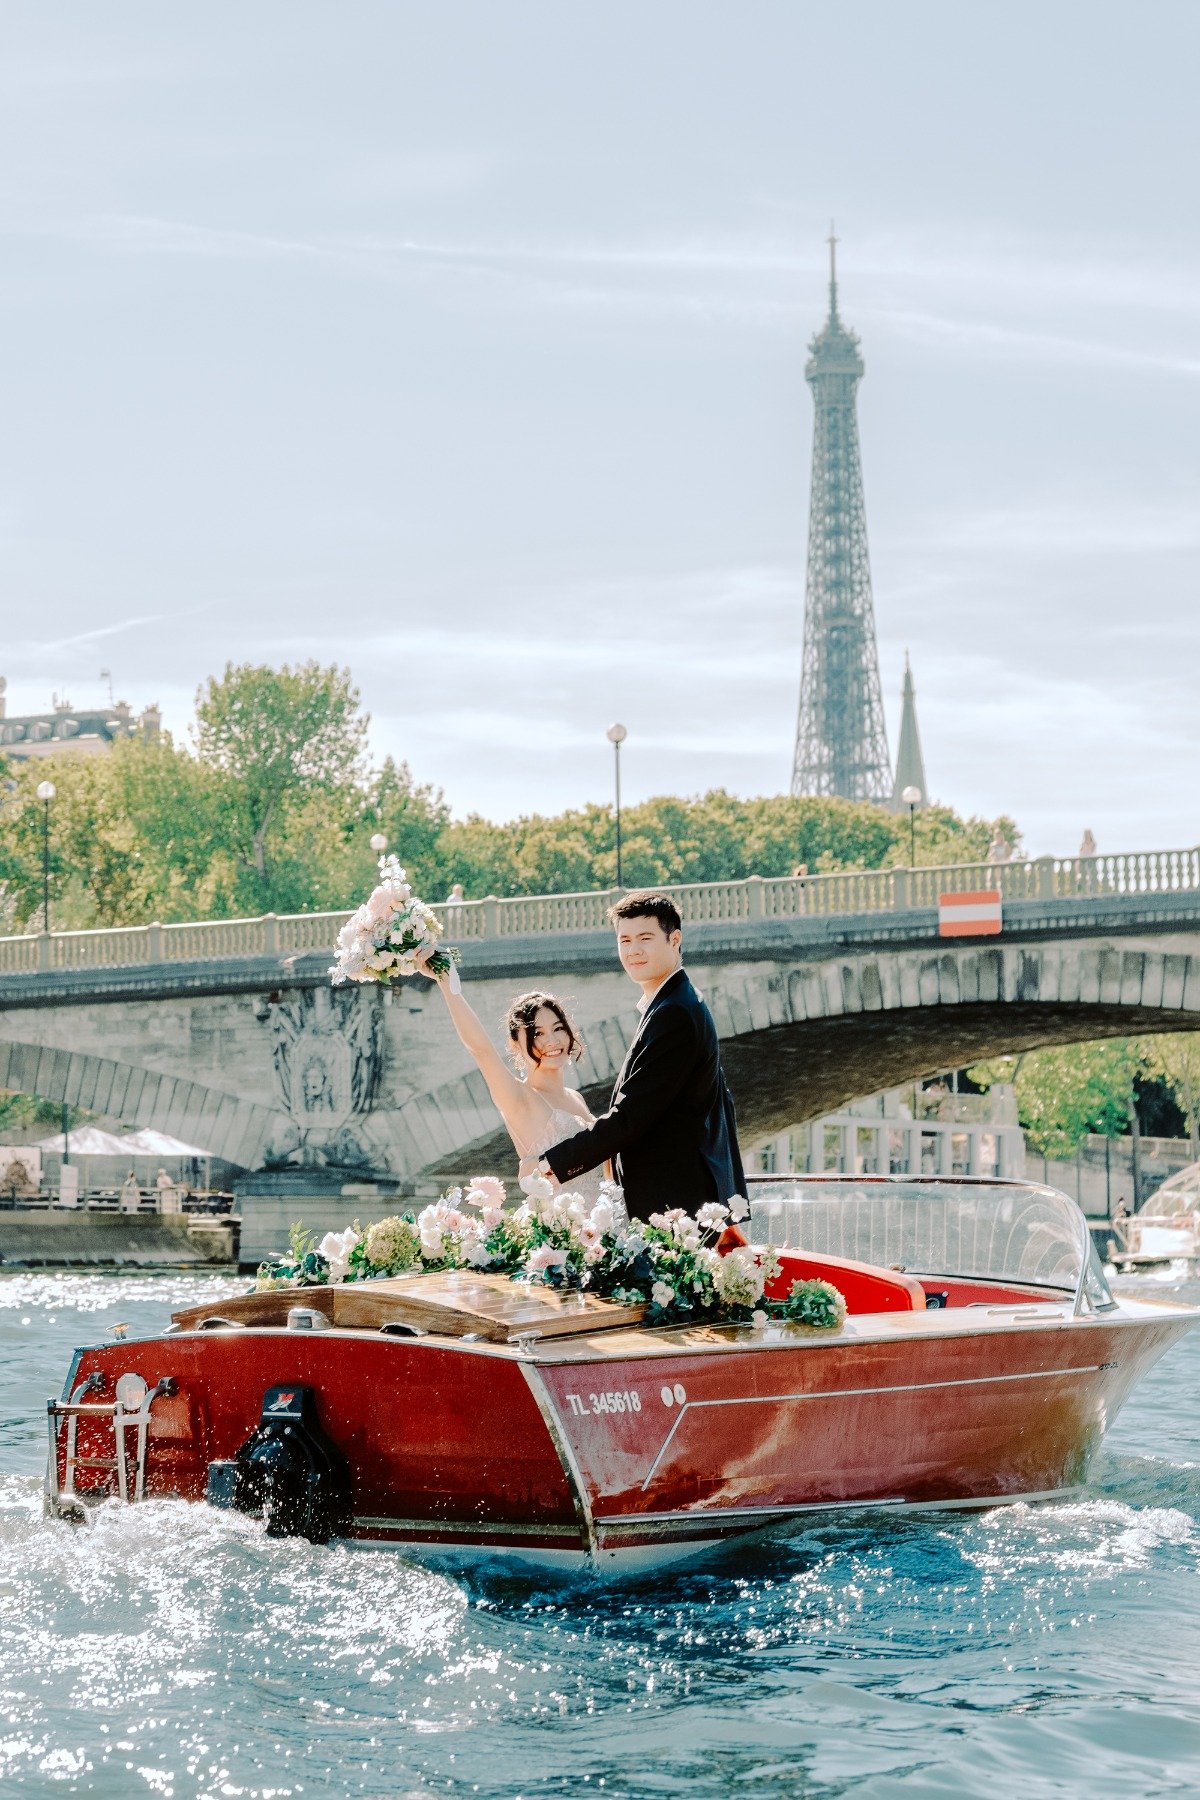 elizaveta-photography-romance-wedding-paris-boat-cruise-62